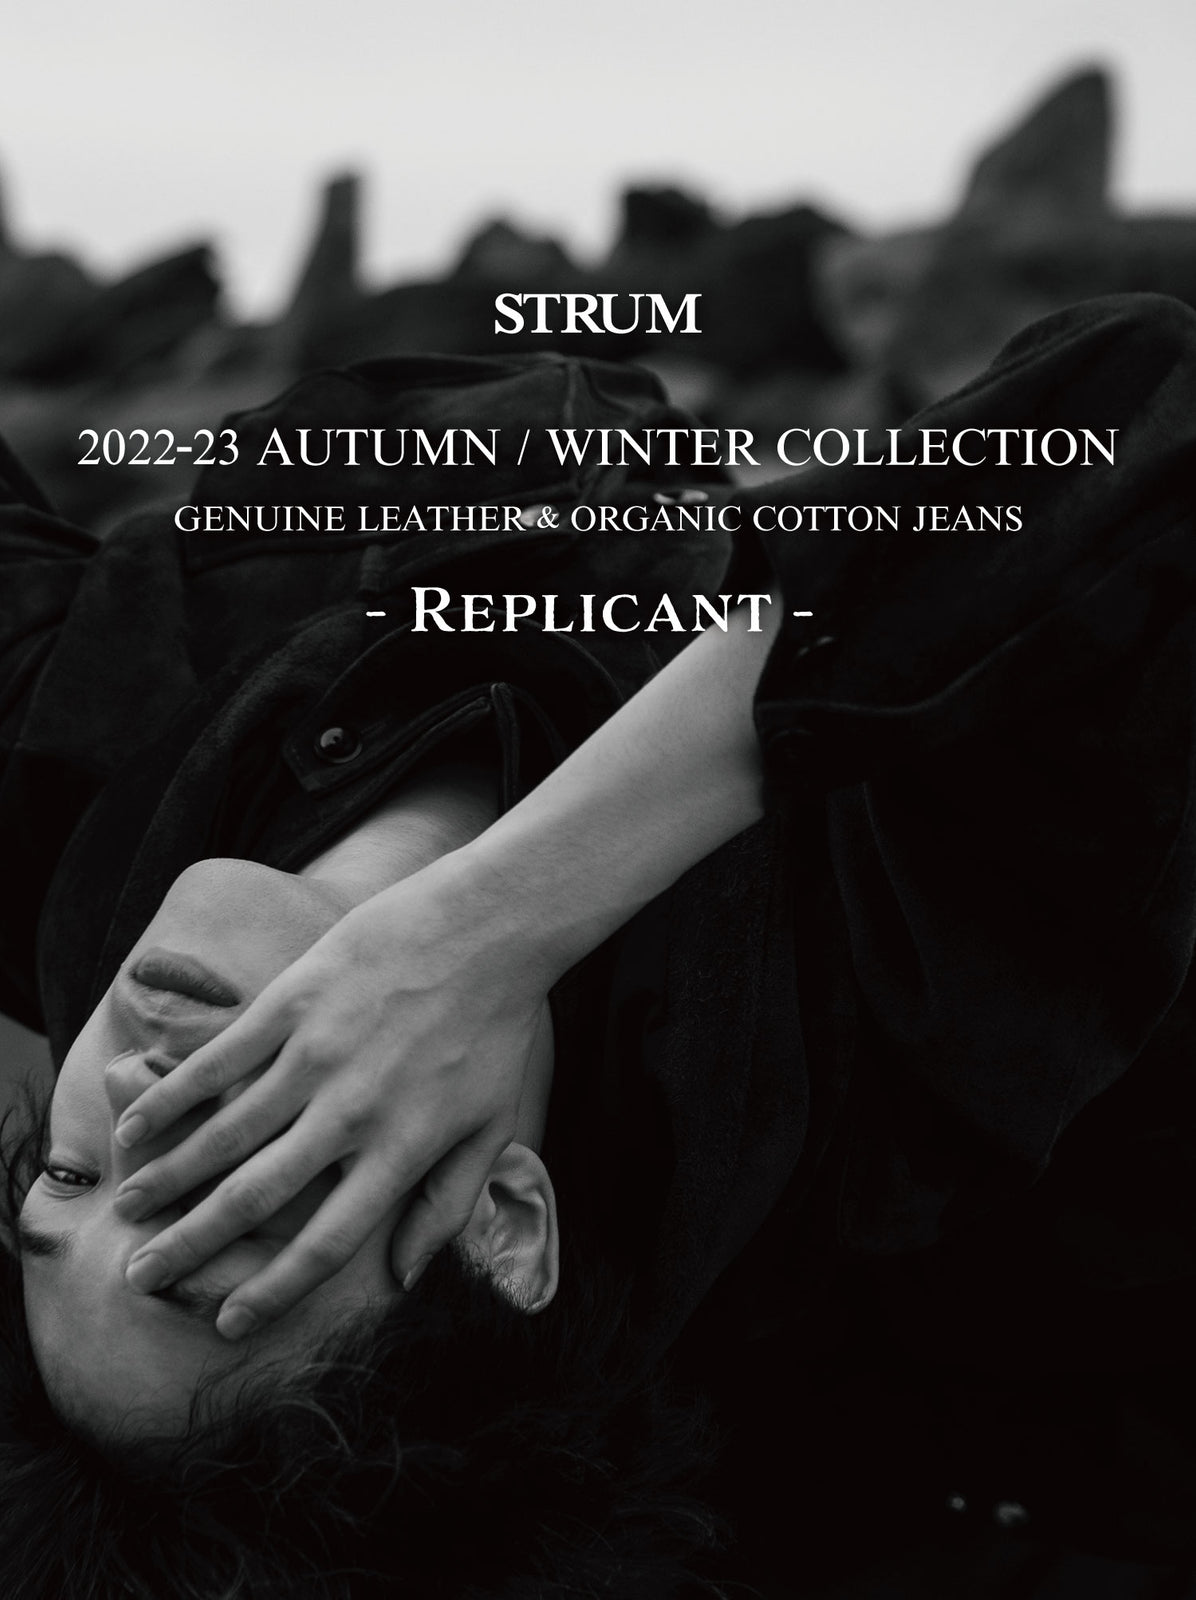 『STRUM』 2022-23 AUTUMN / WINTER COLLECTION - Replicant - イメージPhoto 第二弾公開！